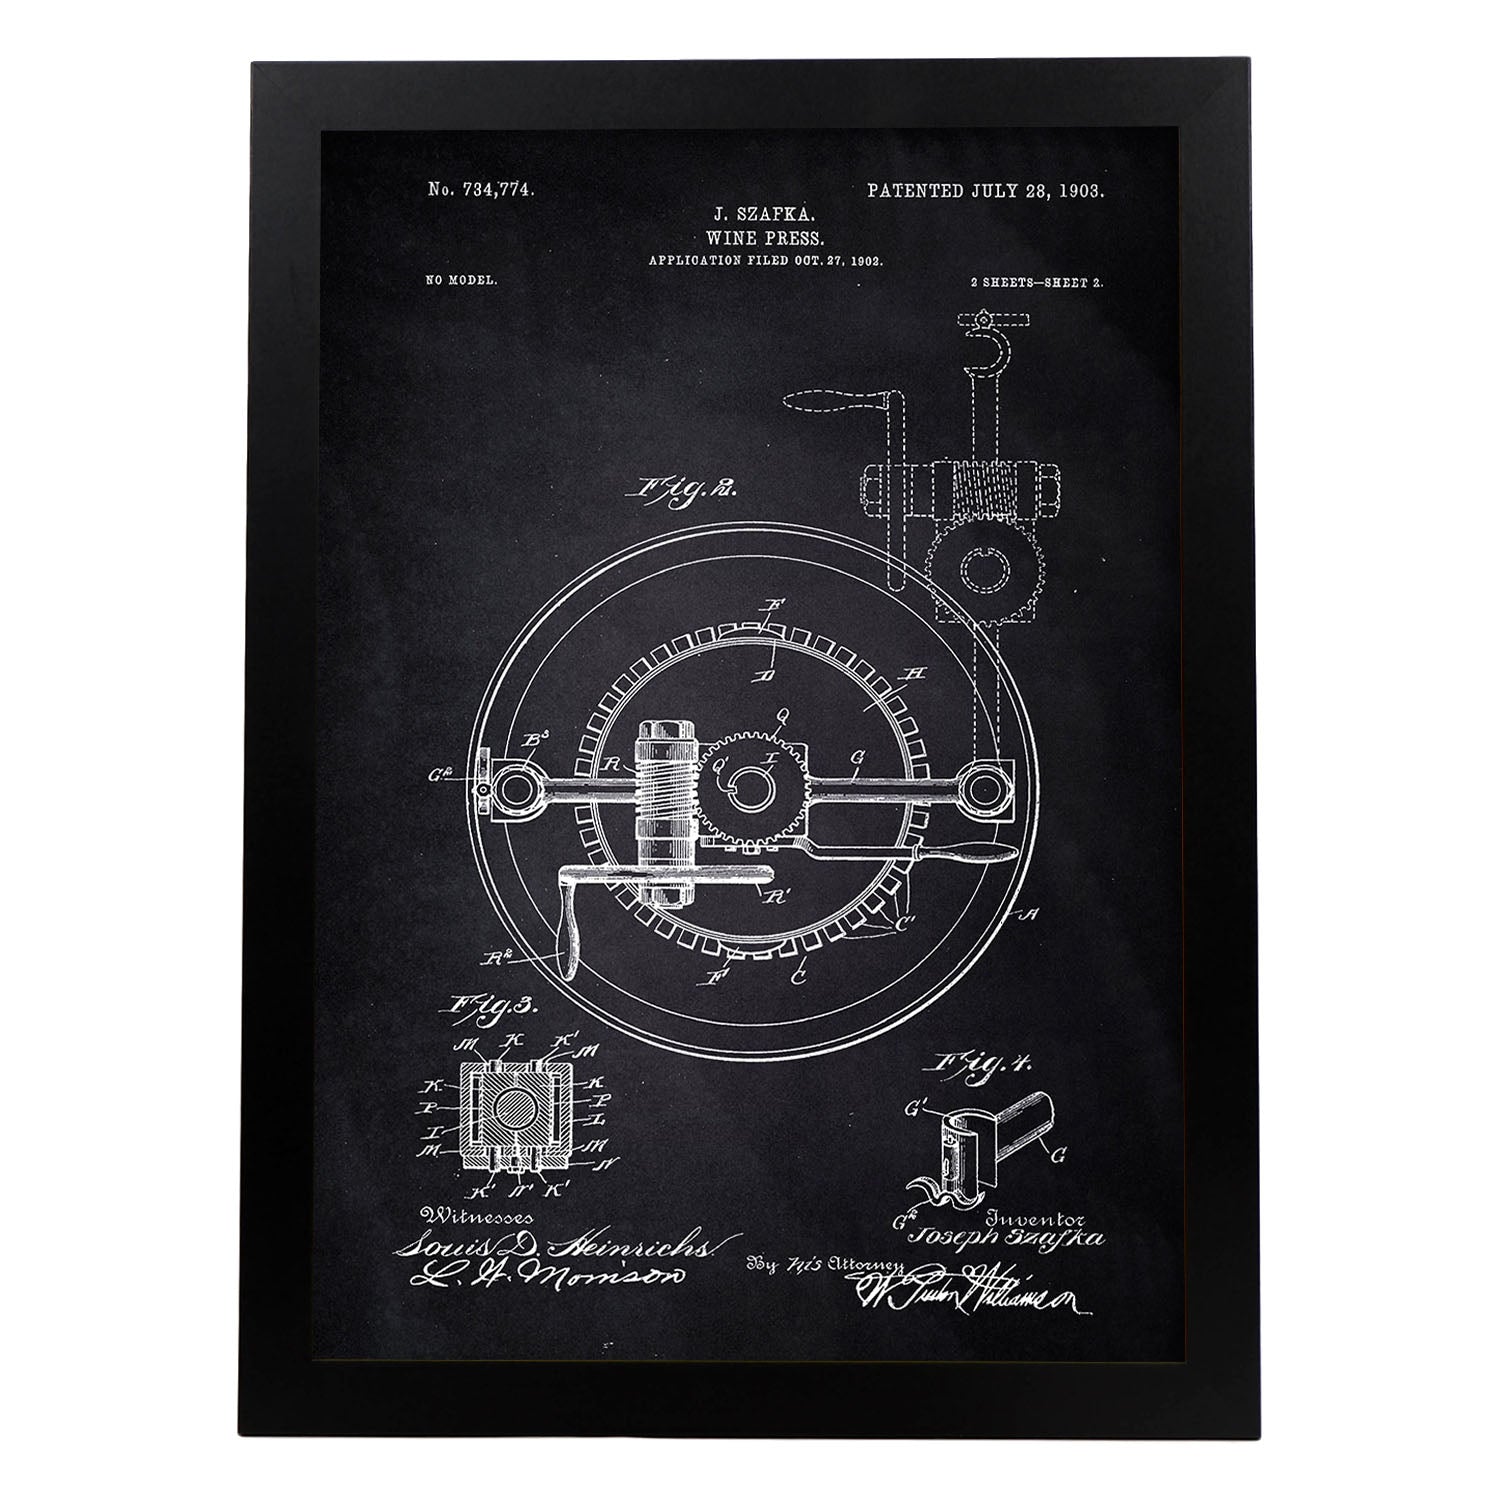 Poster con patente de Prensadora de vino 2. Lámina con diseño de patente antigua-Artwork-Nacnic-A3-Marco Negro-Nacnic Estudio SL